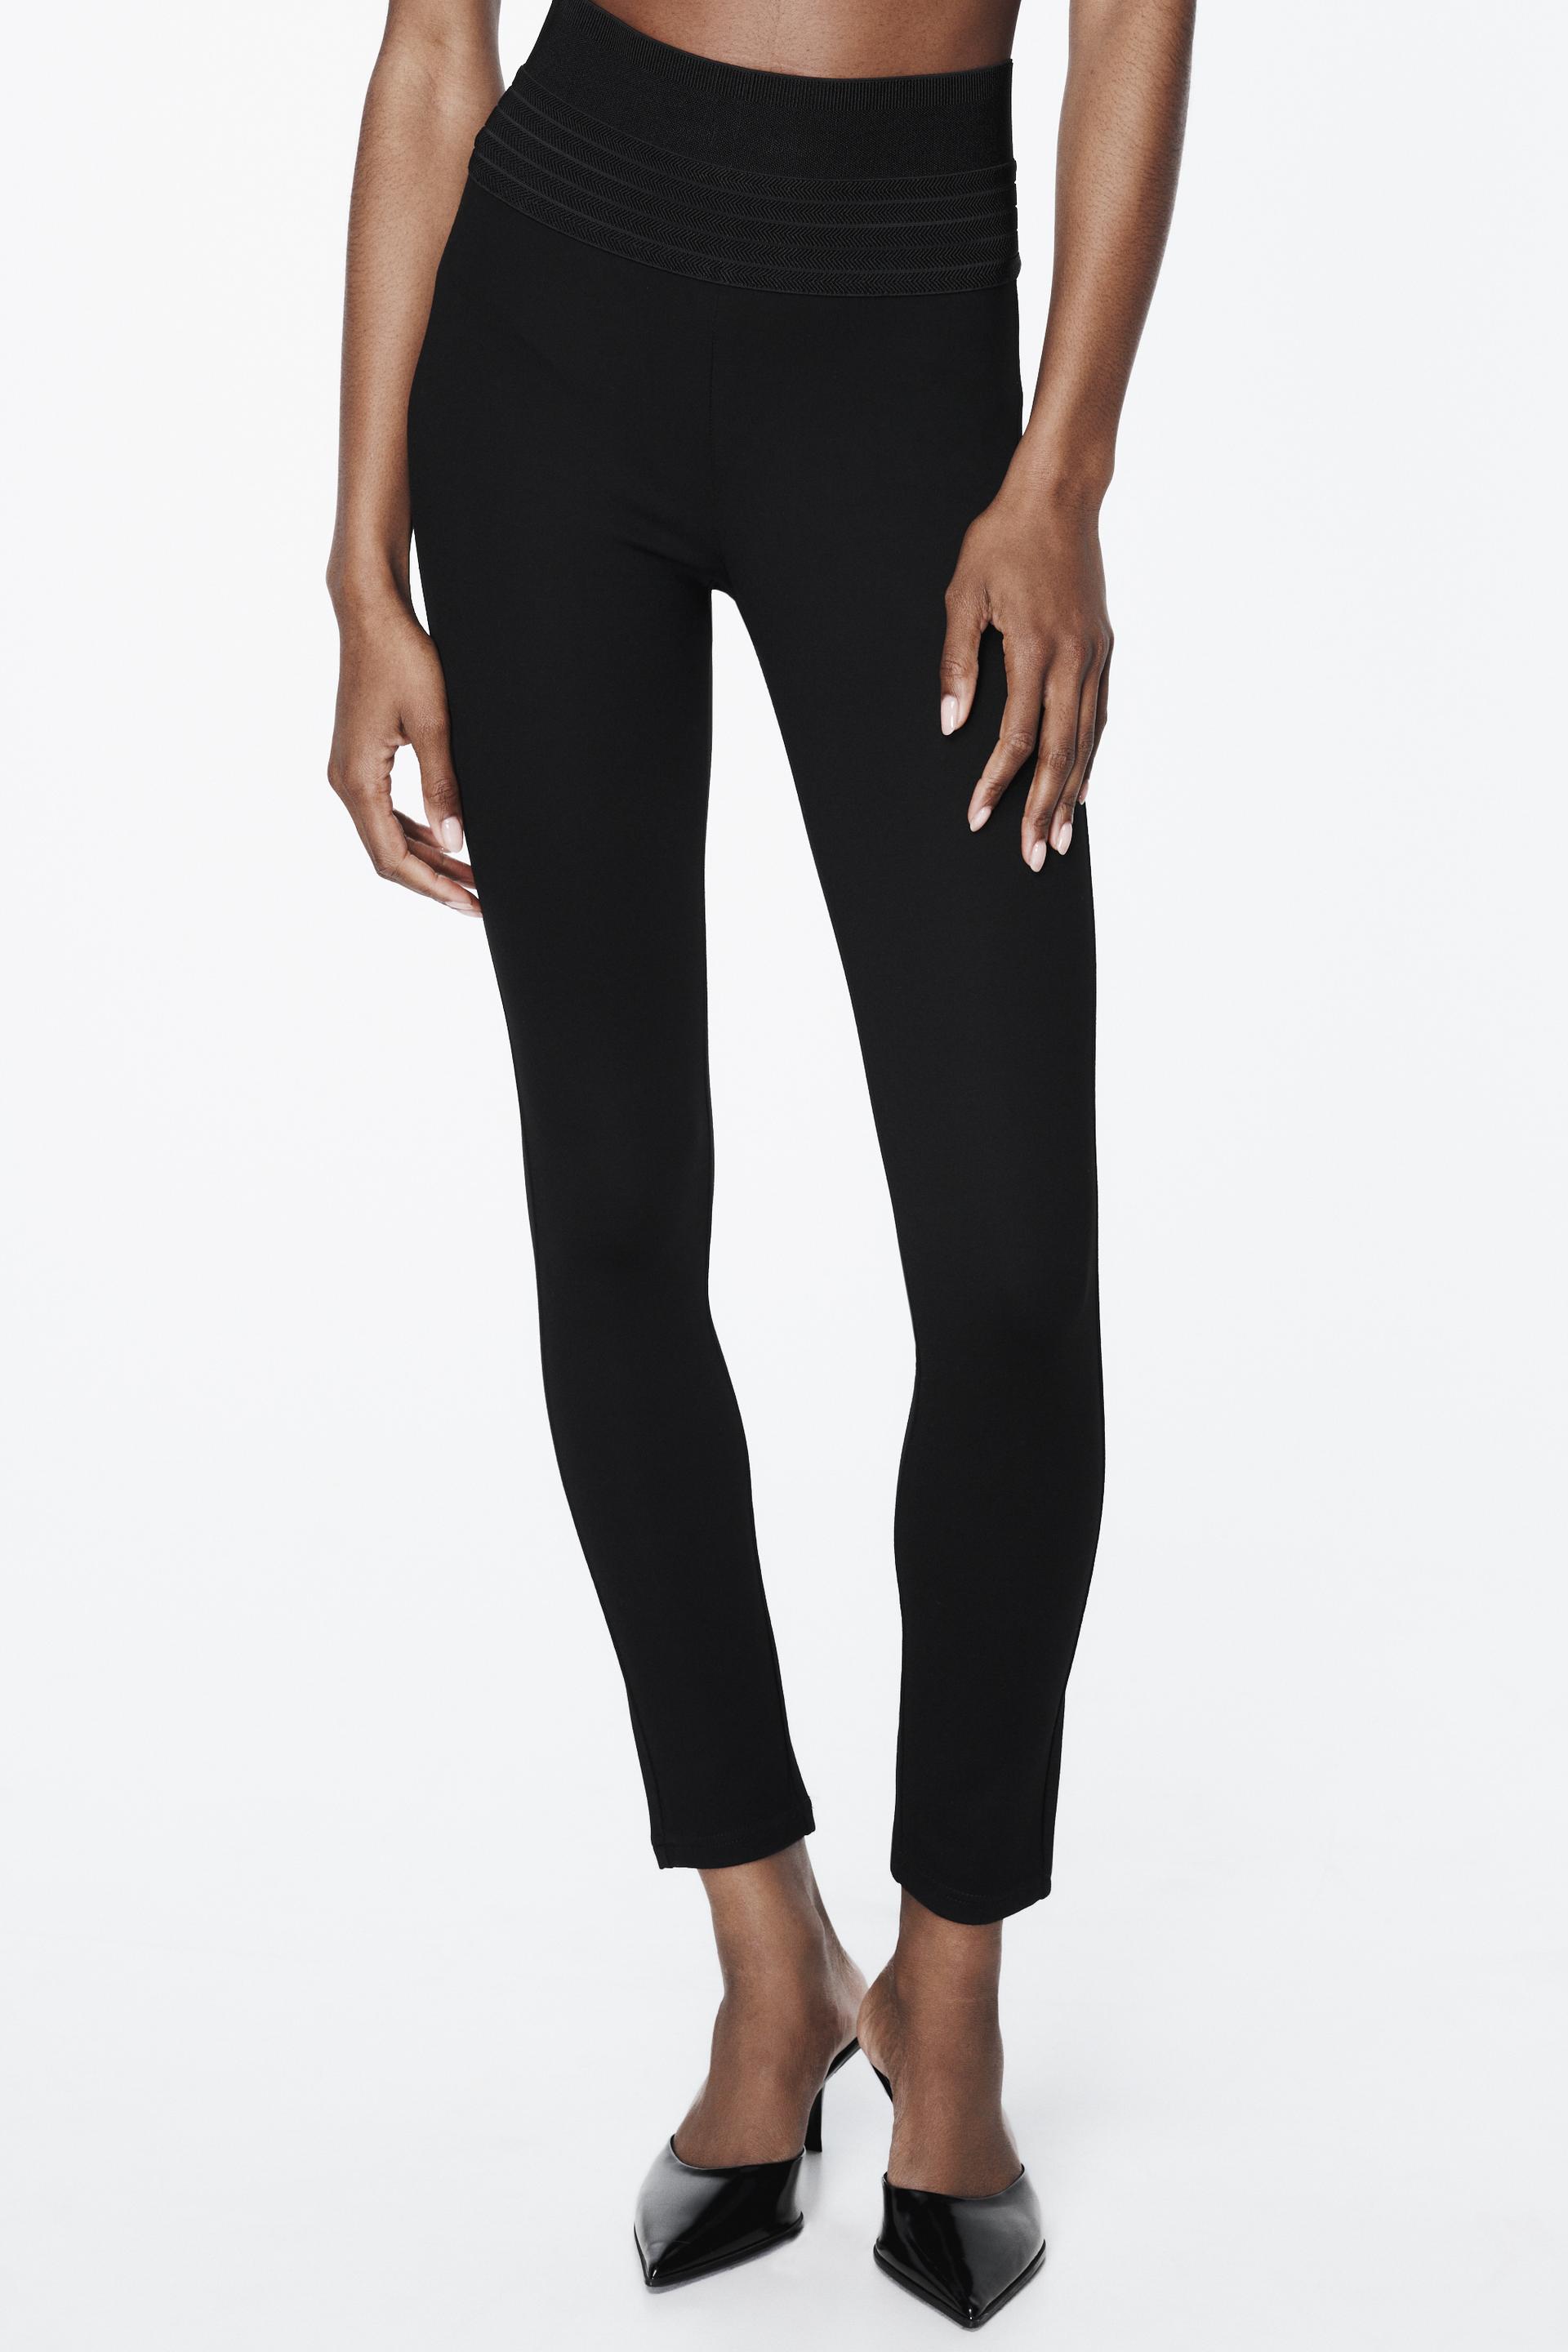 NEW Zara Legging Women's Small Black Pull-On Stretch High Rise NWT *